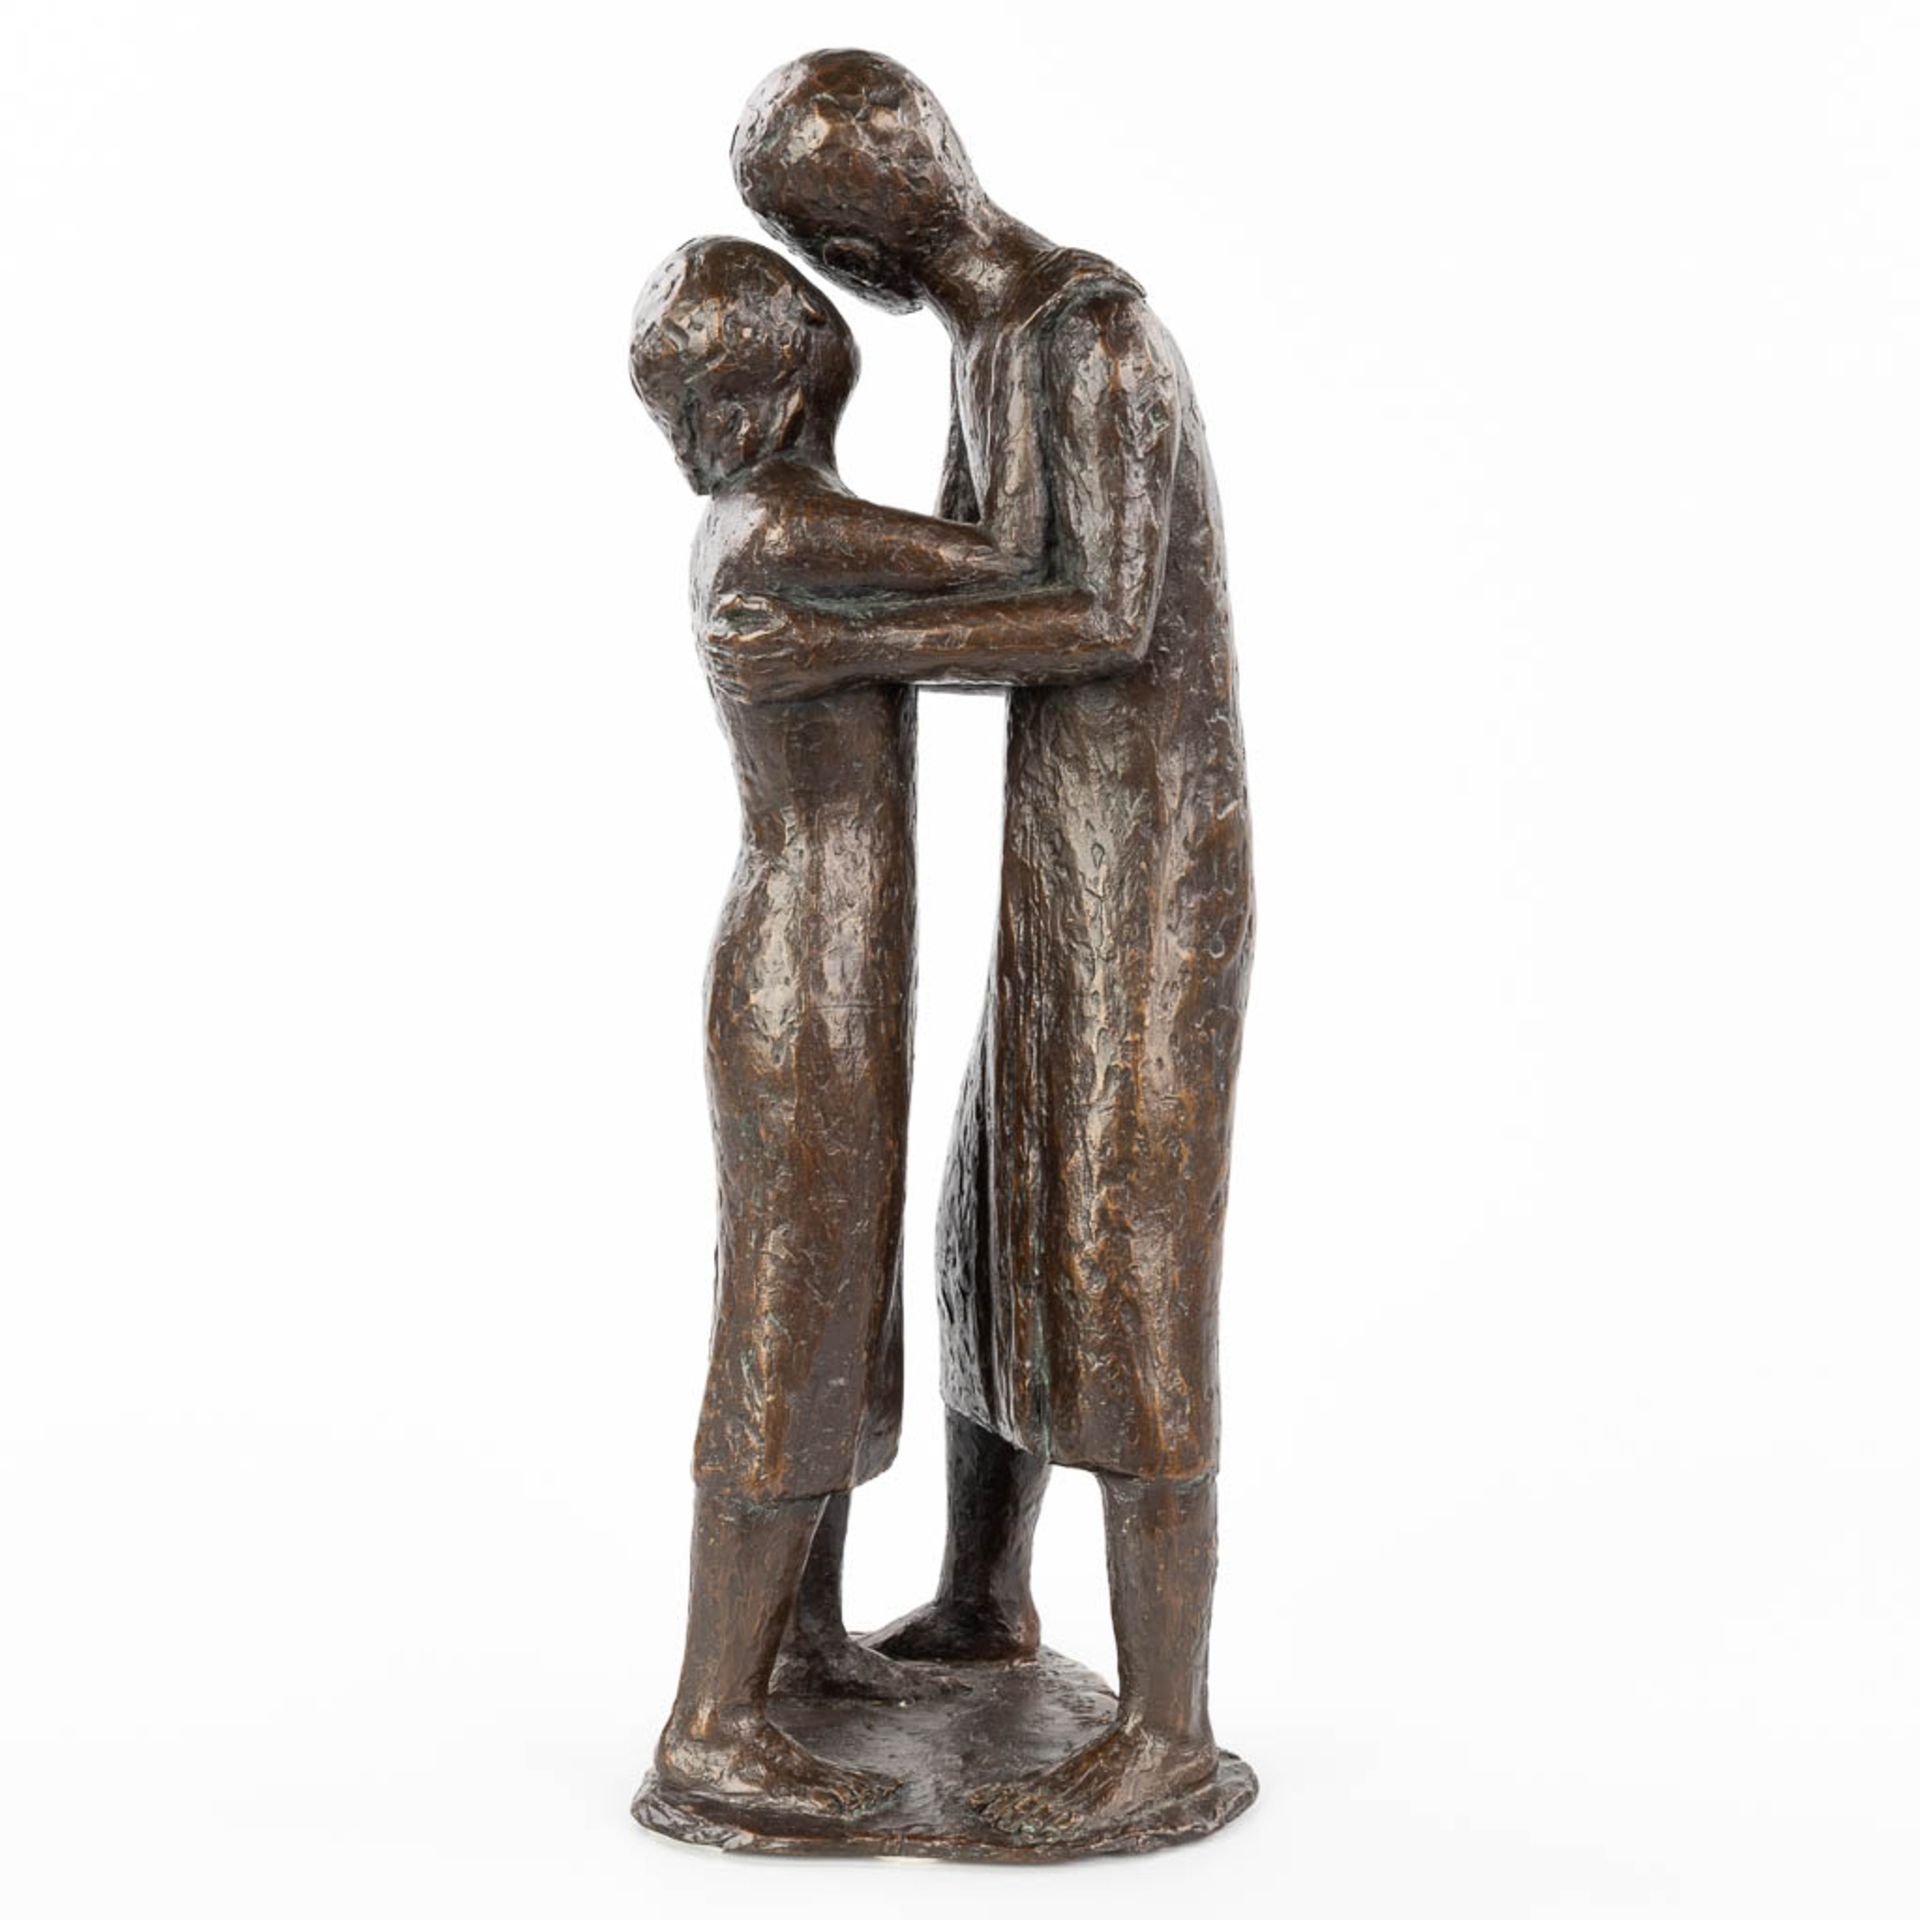 Richard KESSLER (1916) 'Der Abschied' ' Goodbye', patinated bronze. (H:41cm) - Image 7 of 11